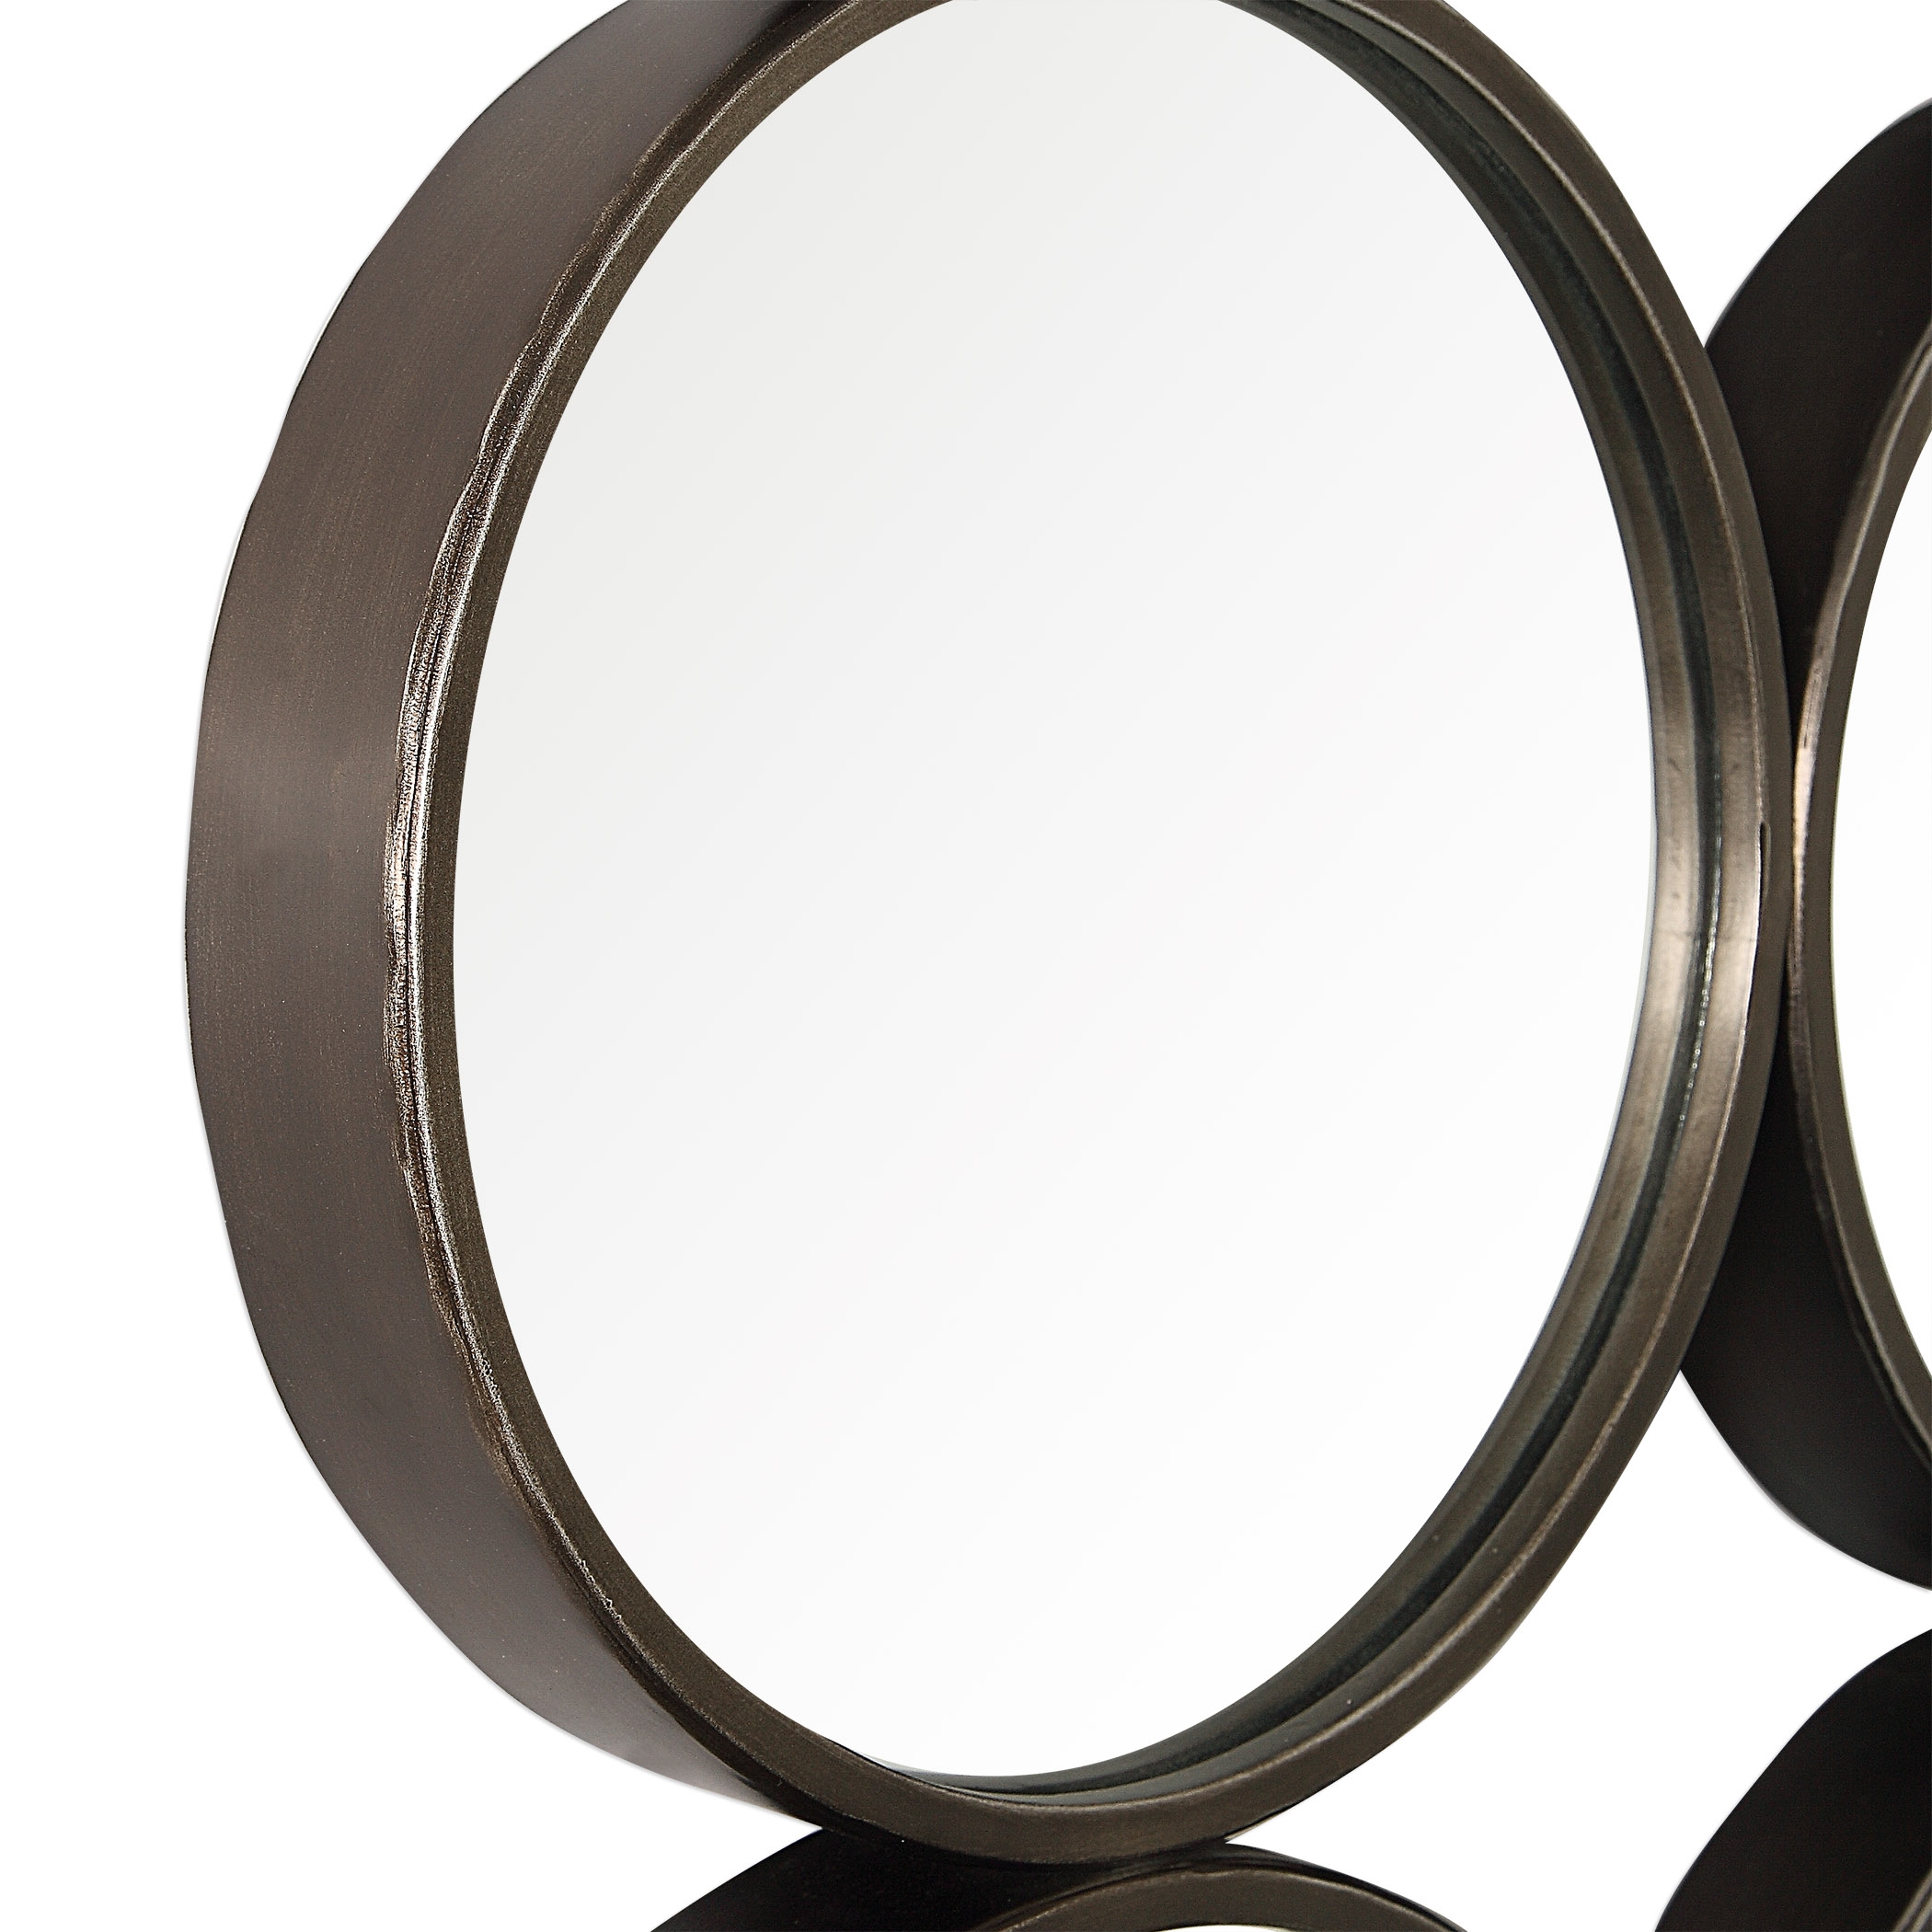 Devet Welded Iron Rings Mirror - Image 1